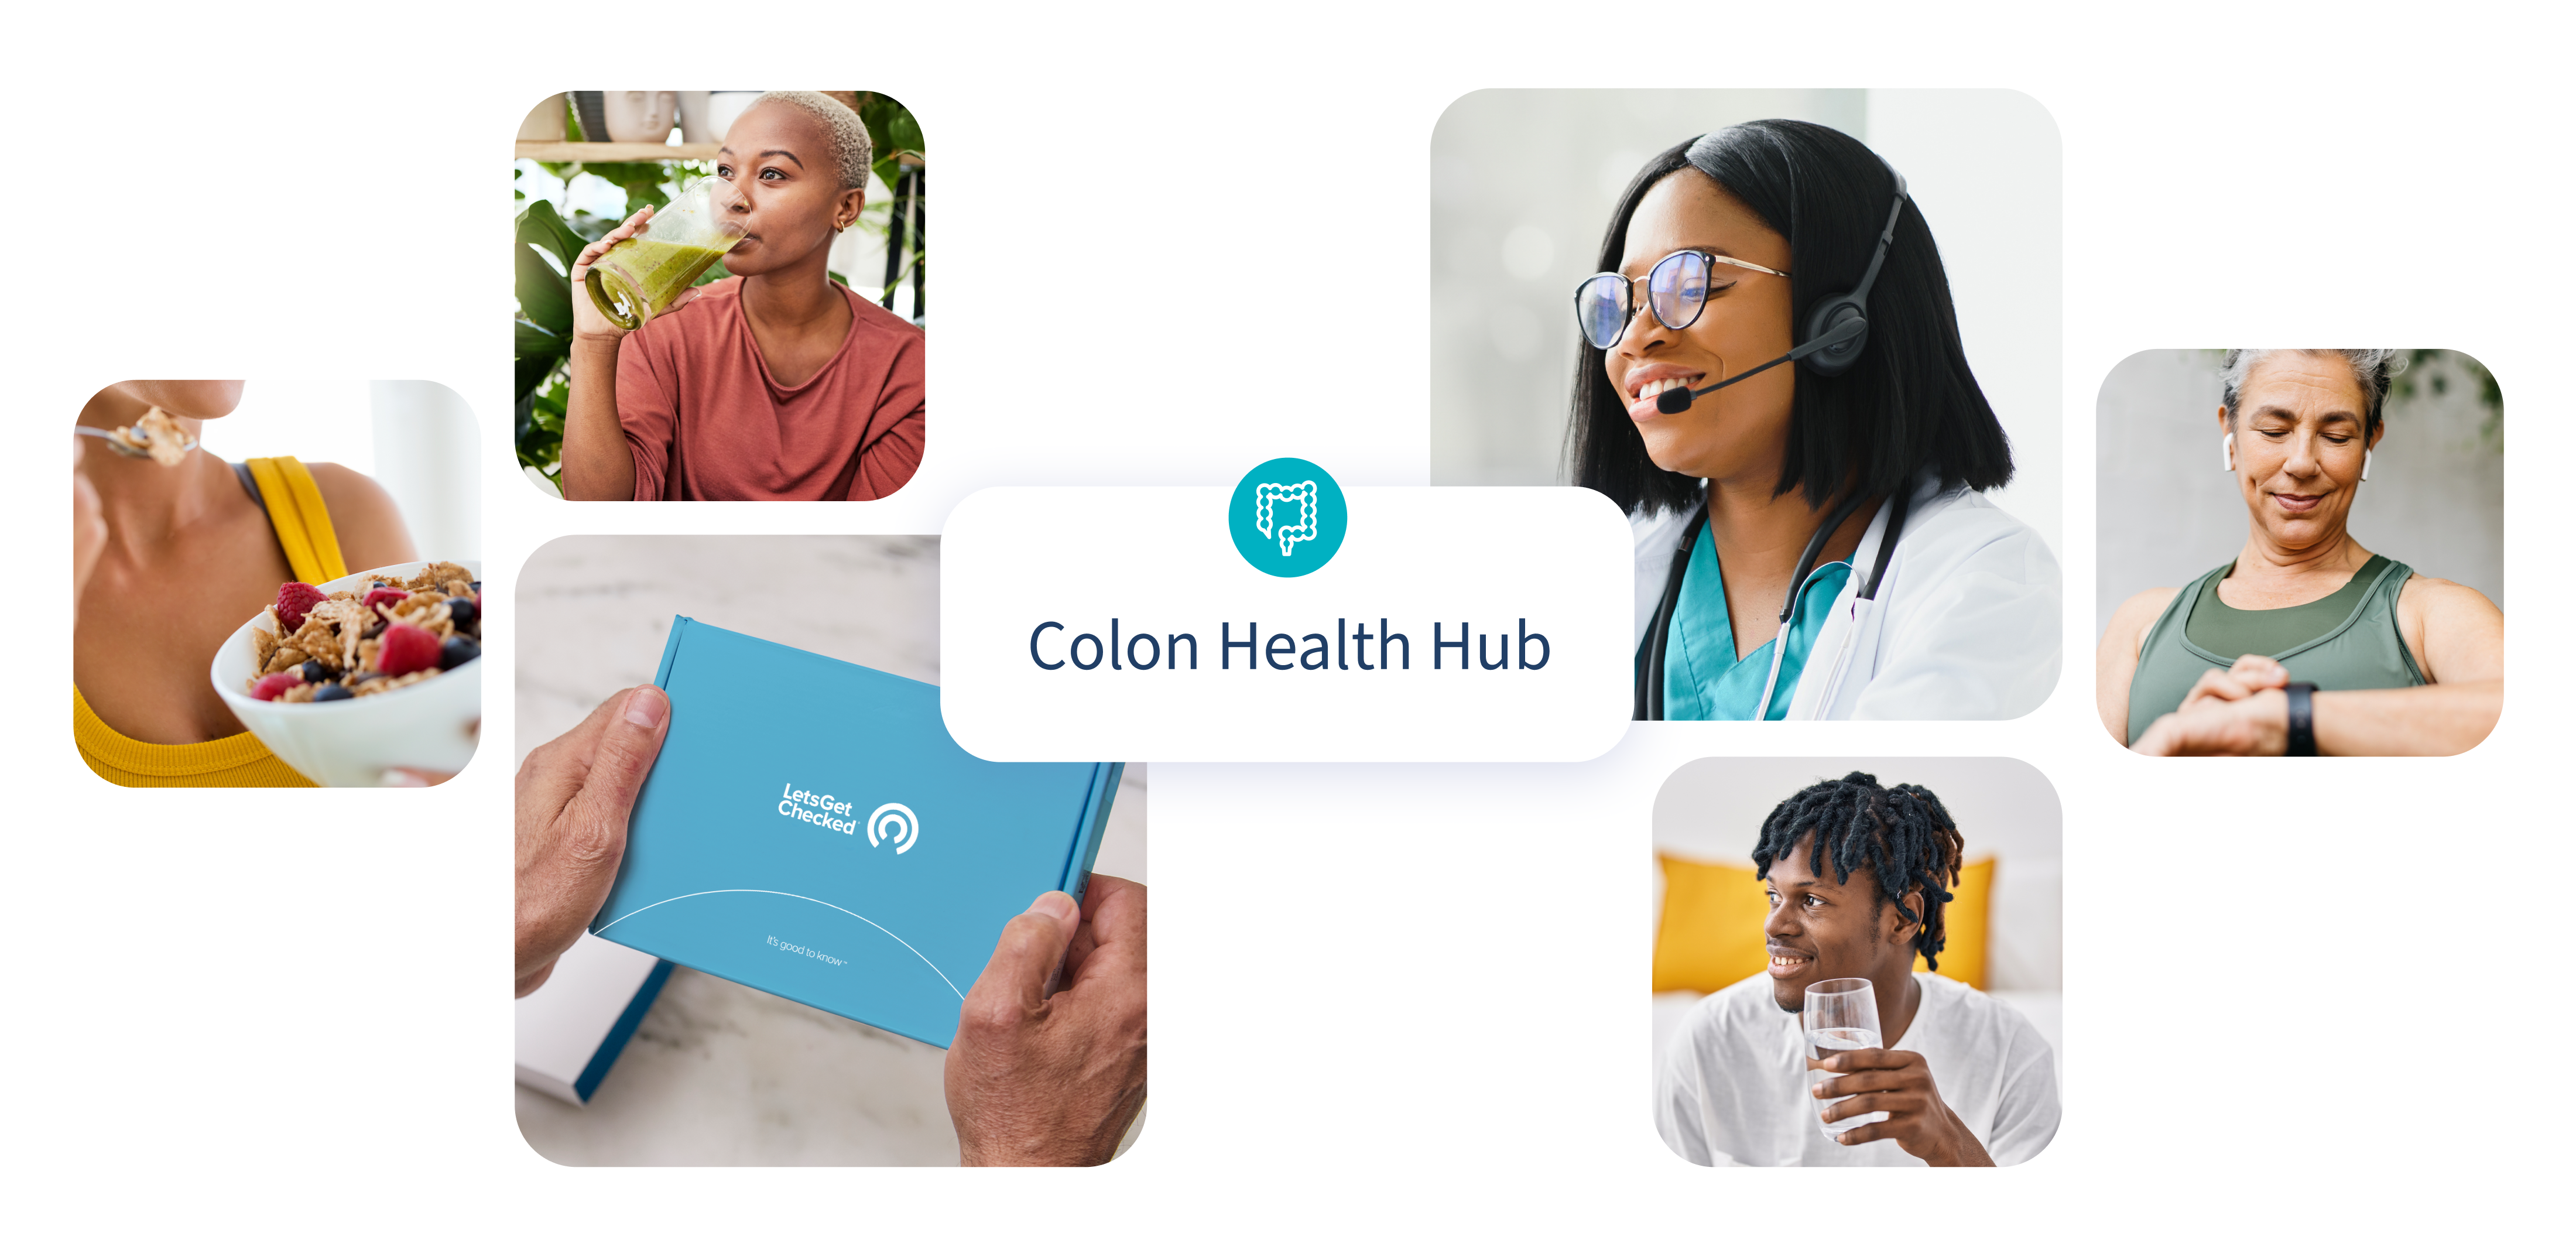 Colon health hub placeholder image